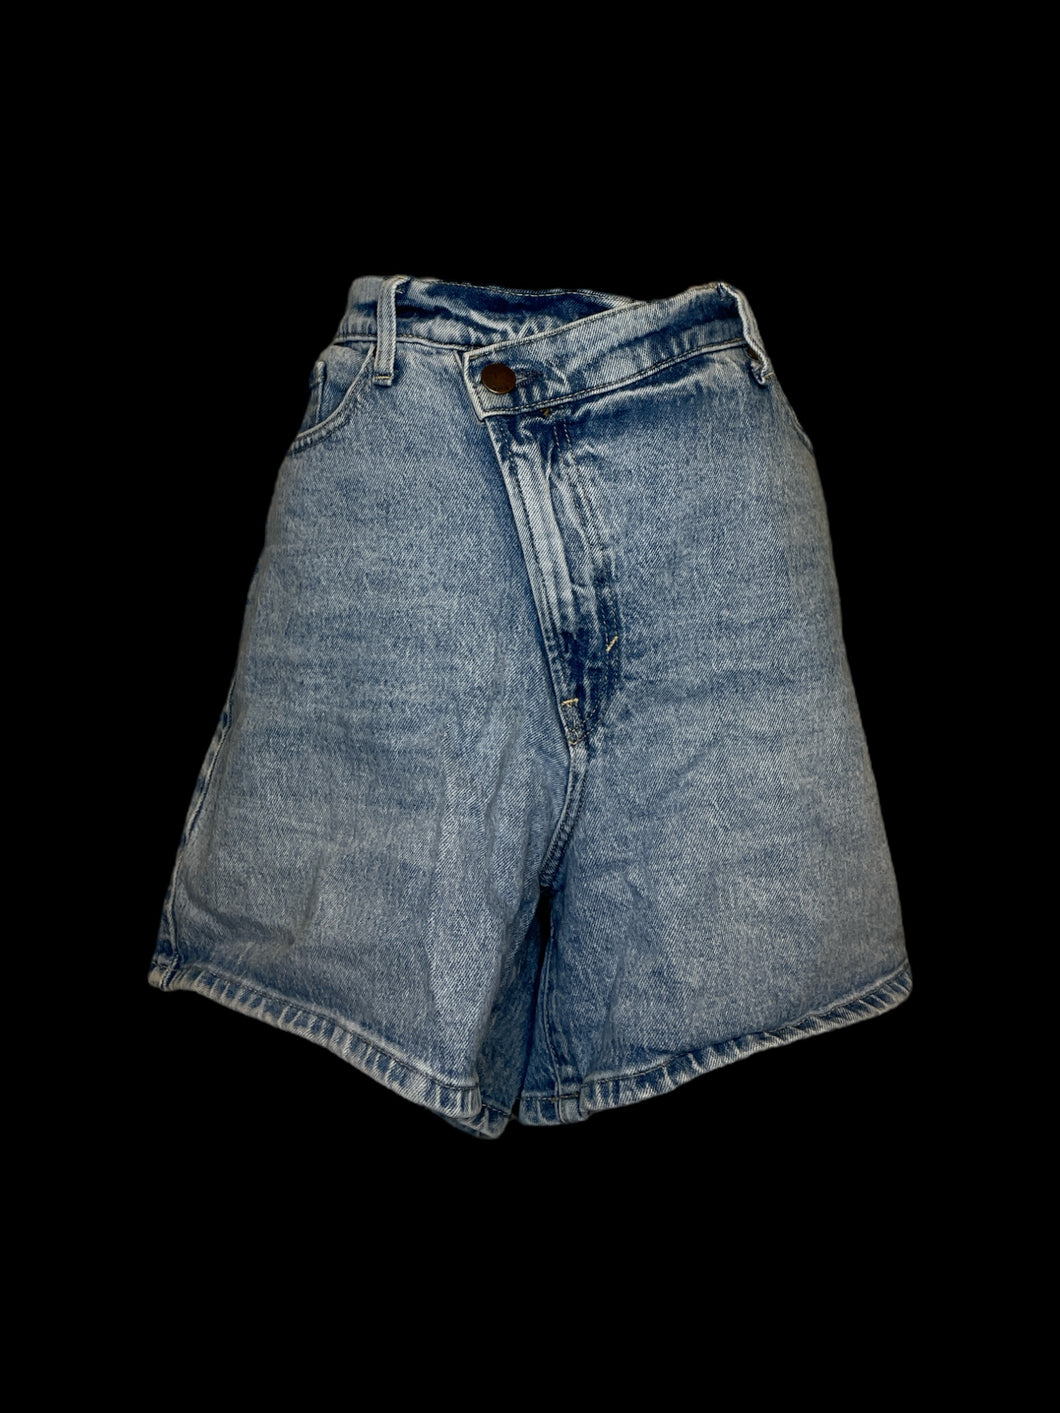 XL Blue denim high-rise shorts w/ pockets, belt loops, & asymmetrical zipper/double button closure